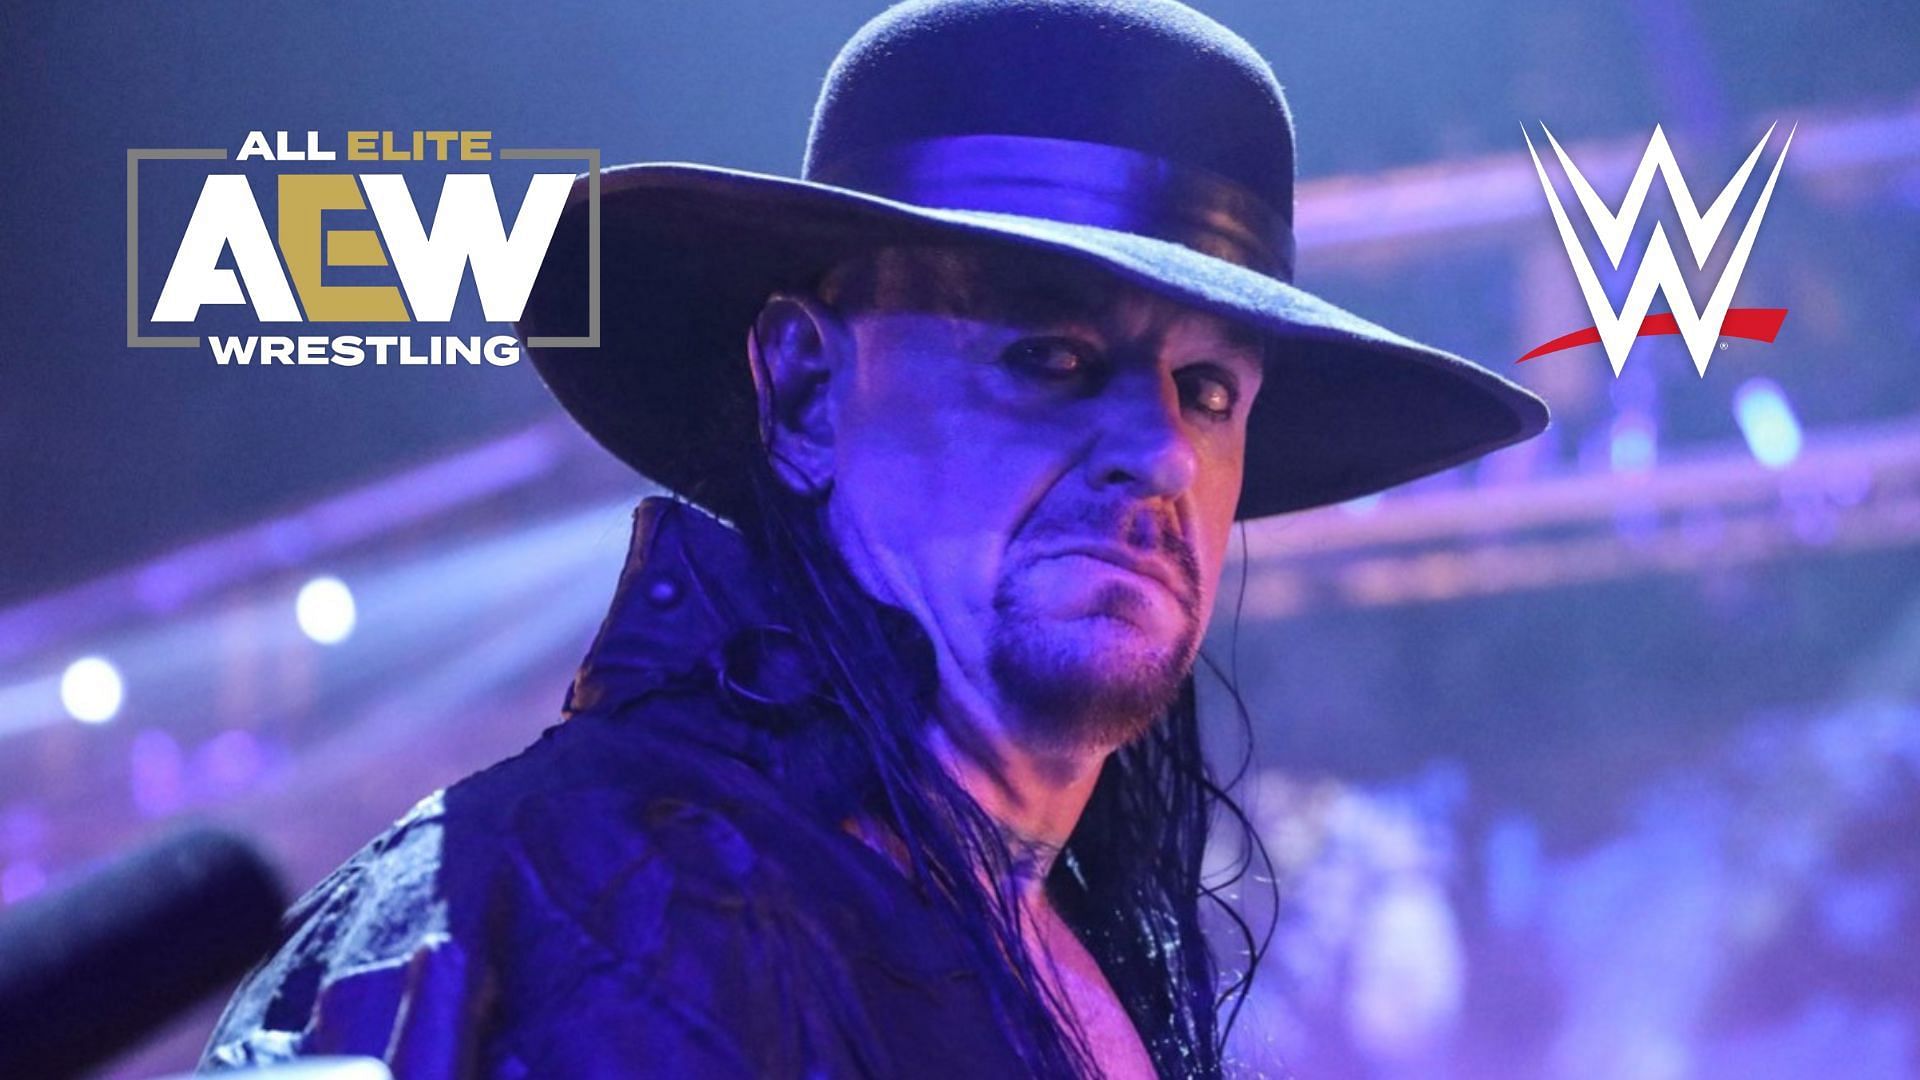 The Undertaker is former WWE World Heavyweight Champion